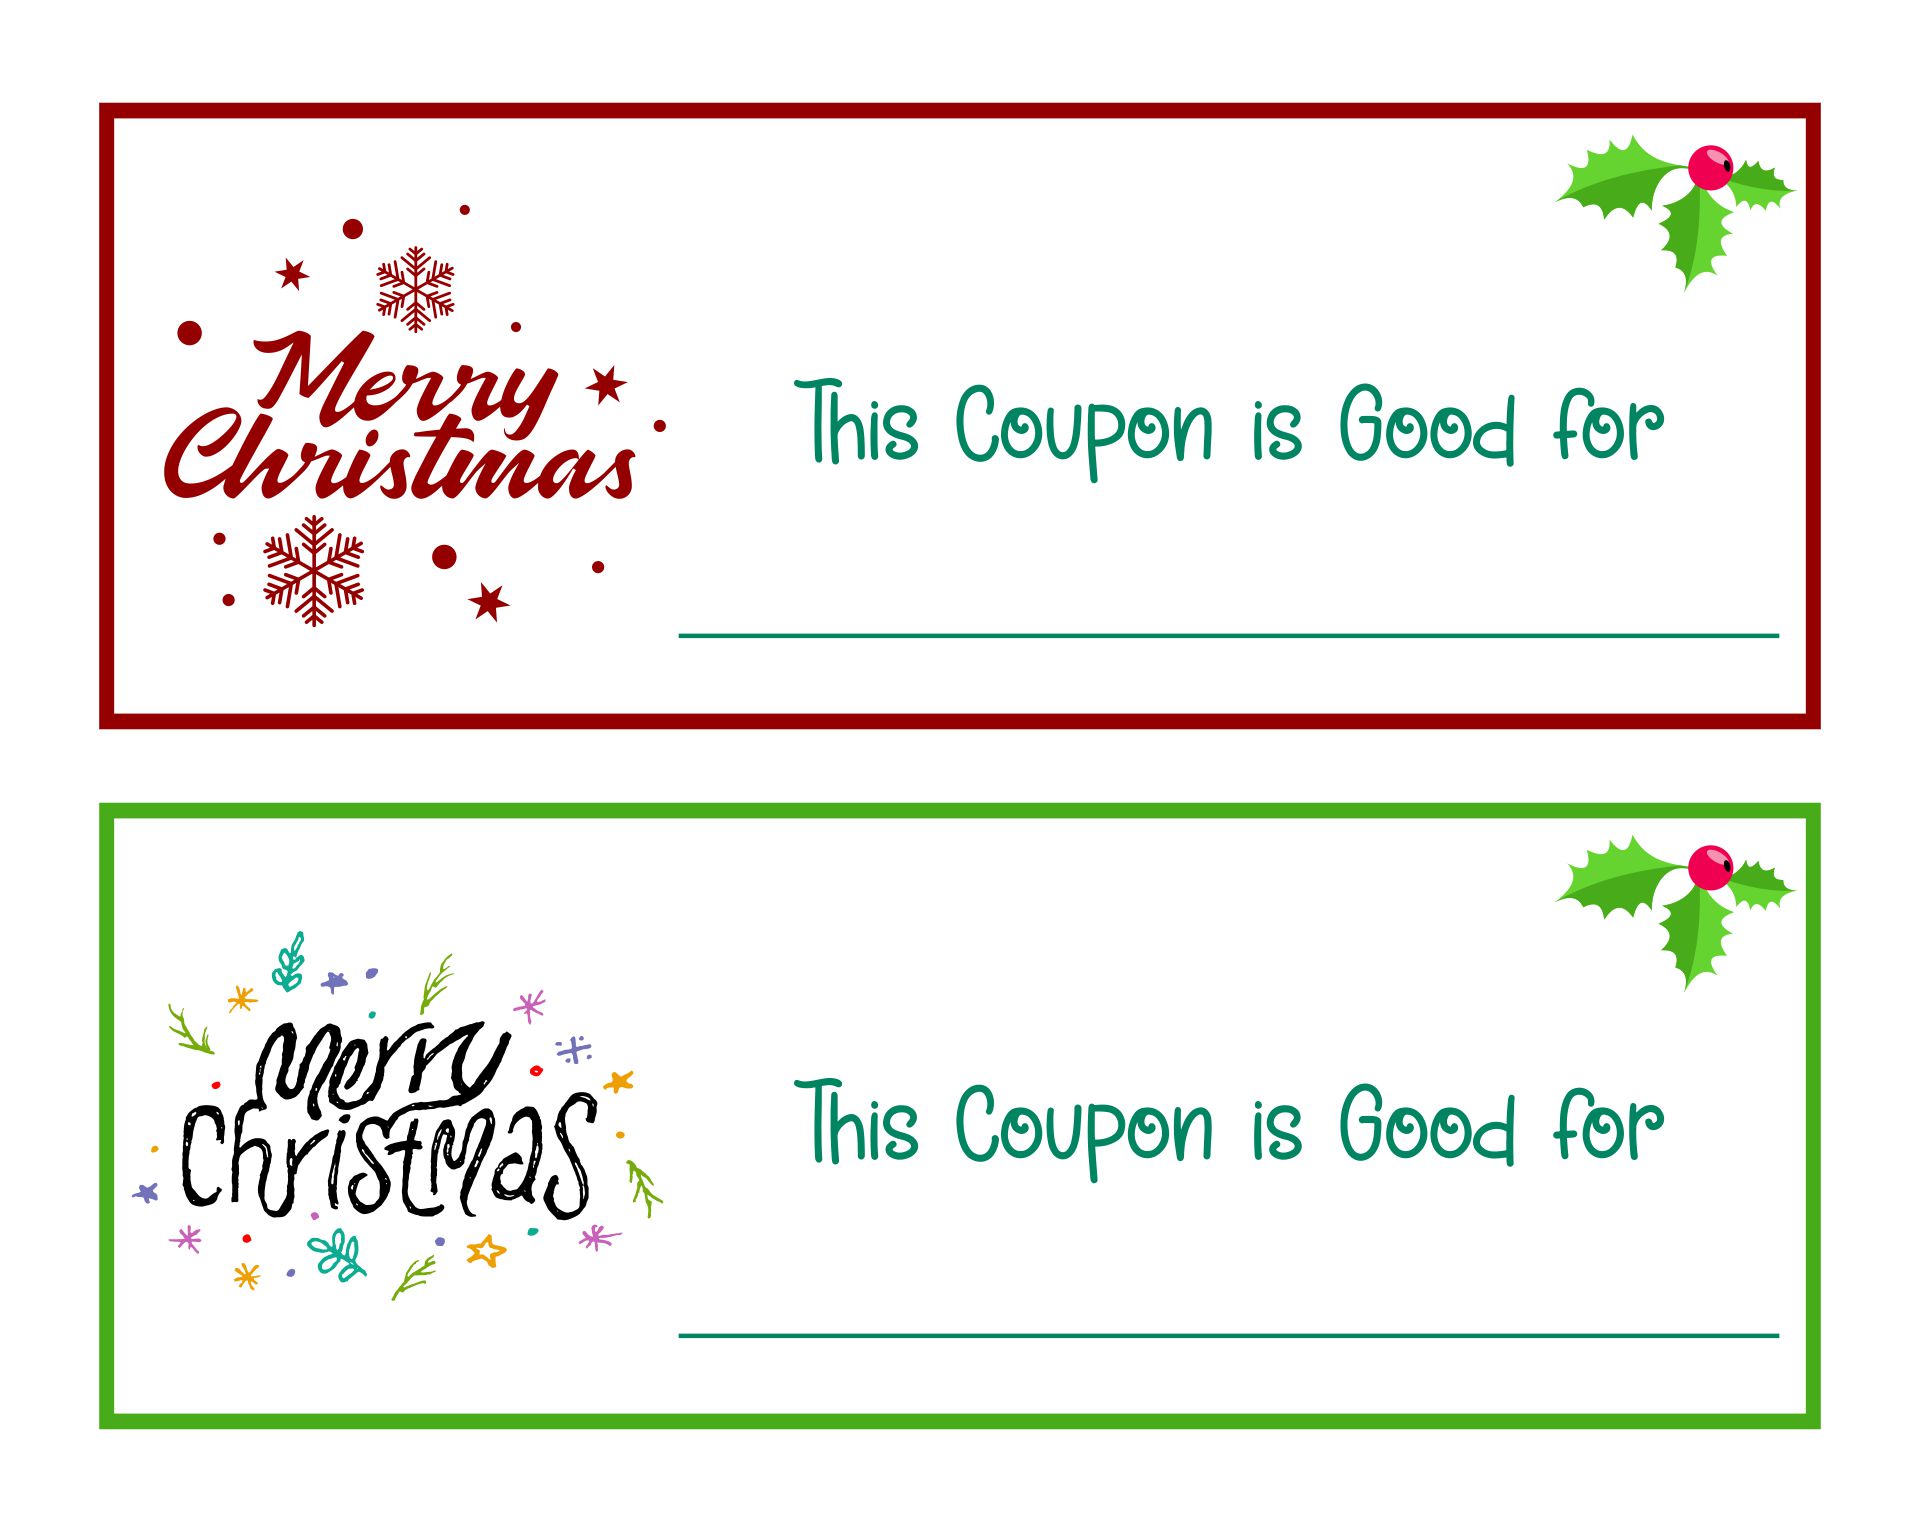 diy-gift-coupon-templates-for-word-free-printables